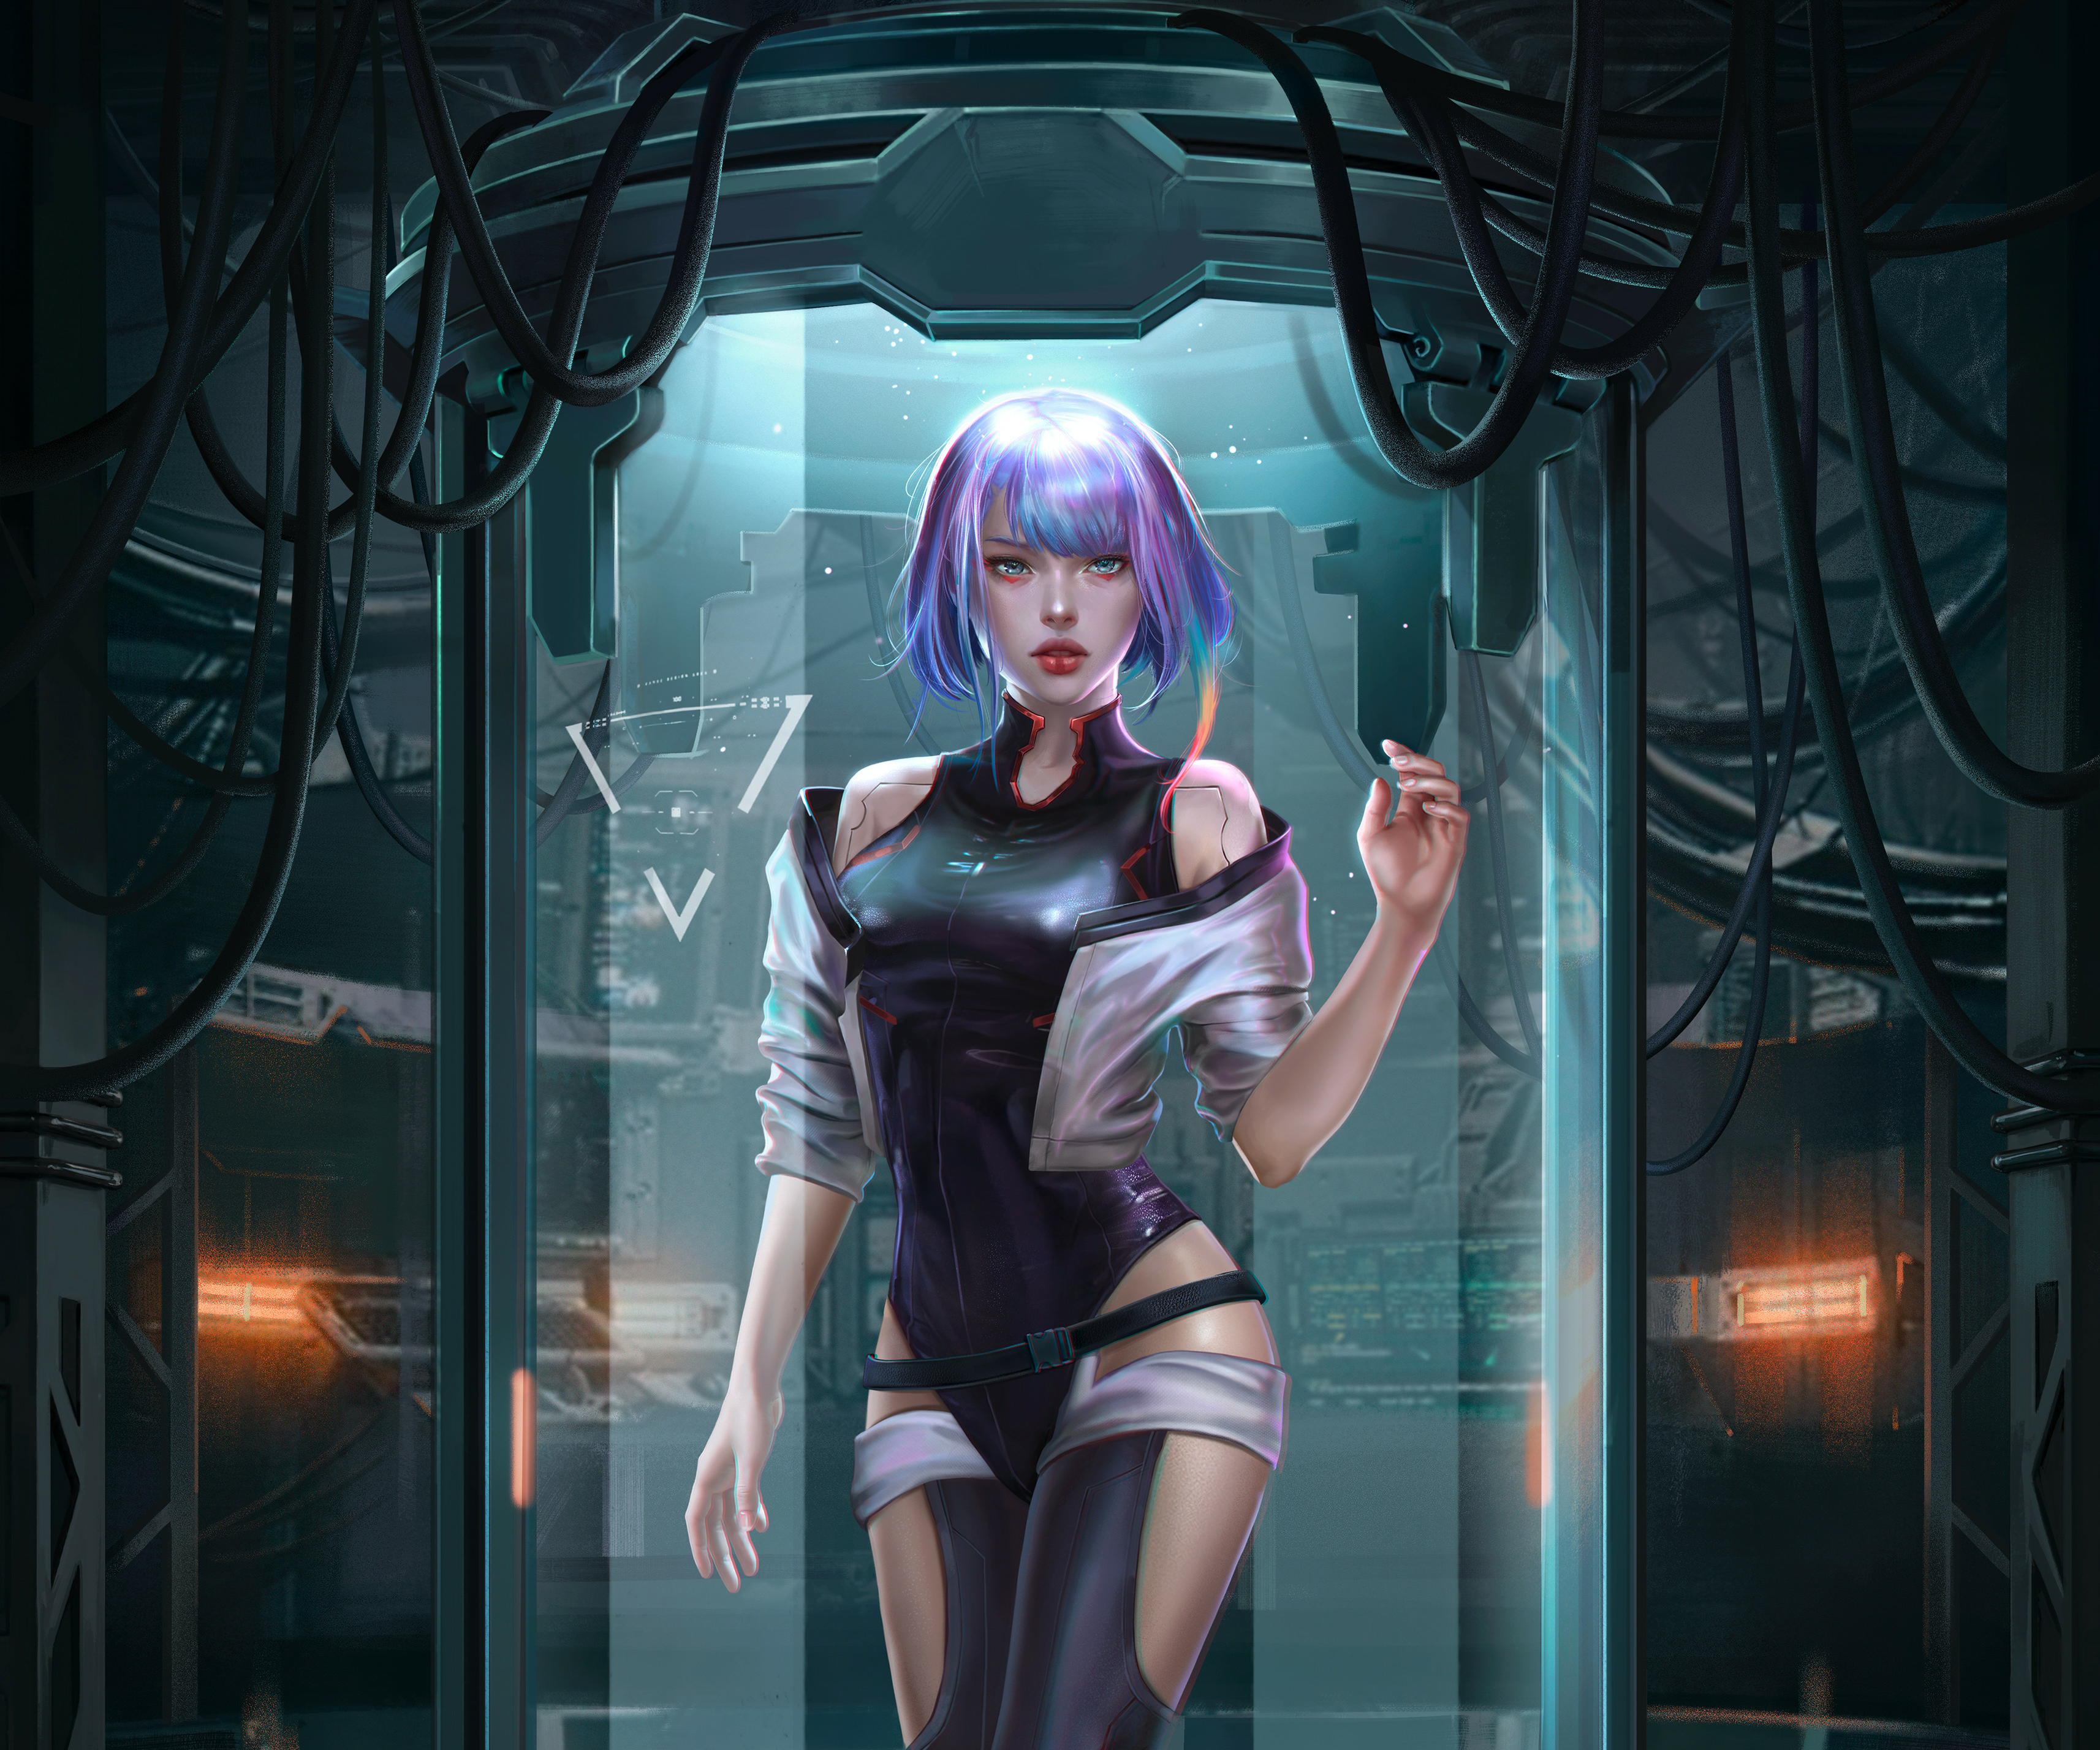 Cyberpunk Girl - Animated Wallpaper 